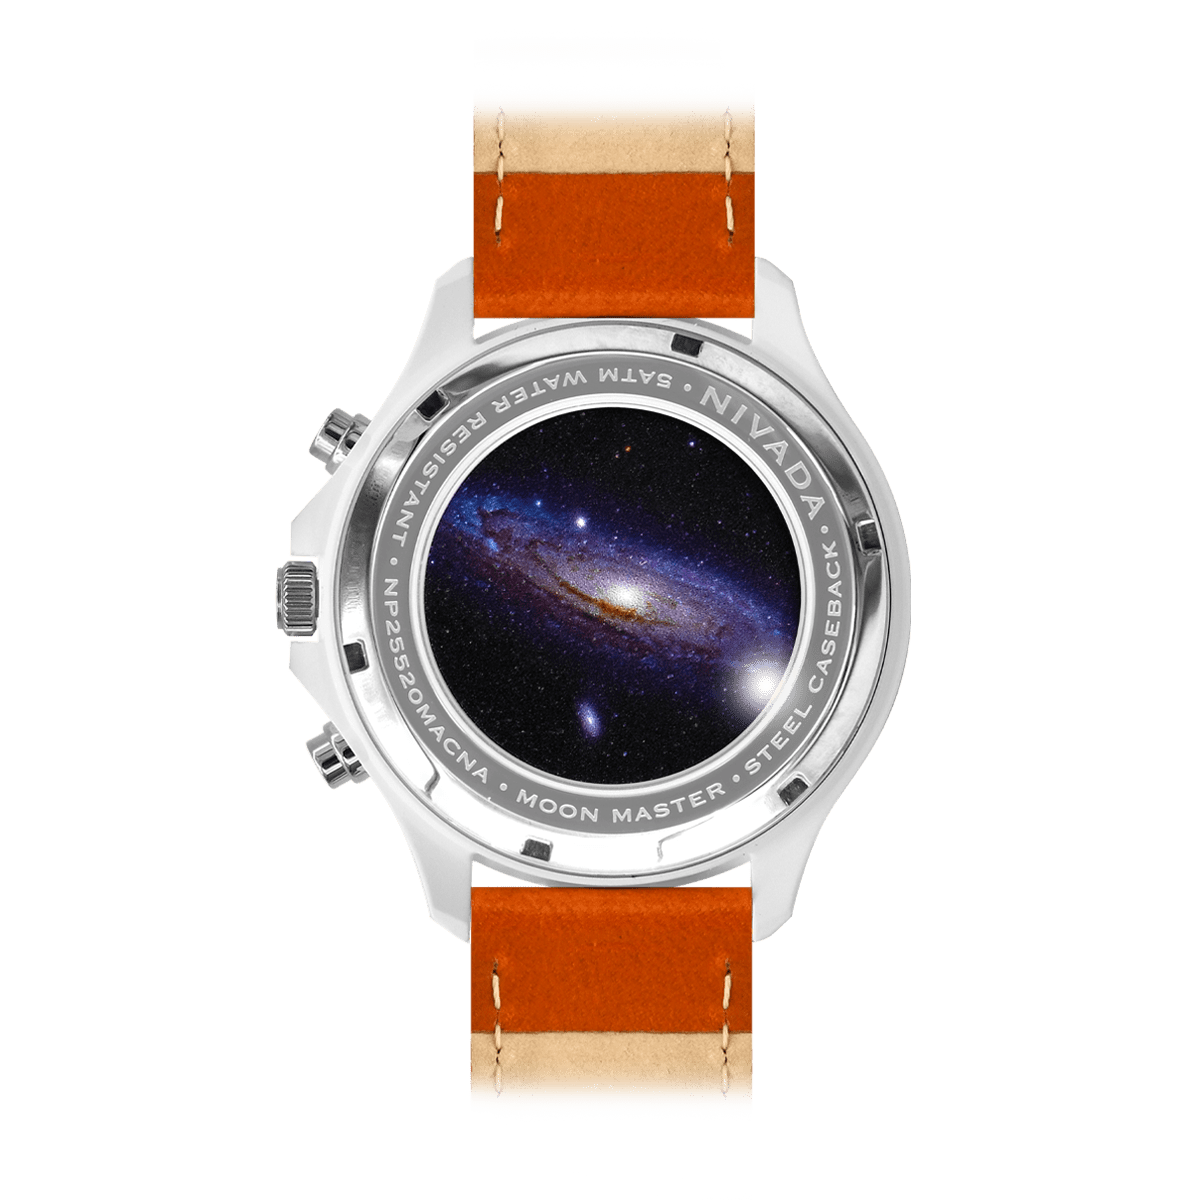 Moonmaster Cerámica Cronógrafo Naranja - Reloj Nivada Swiss